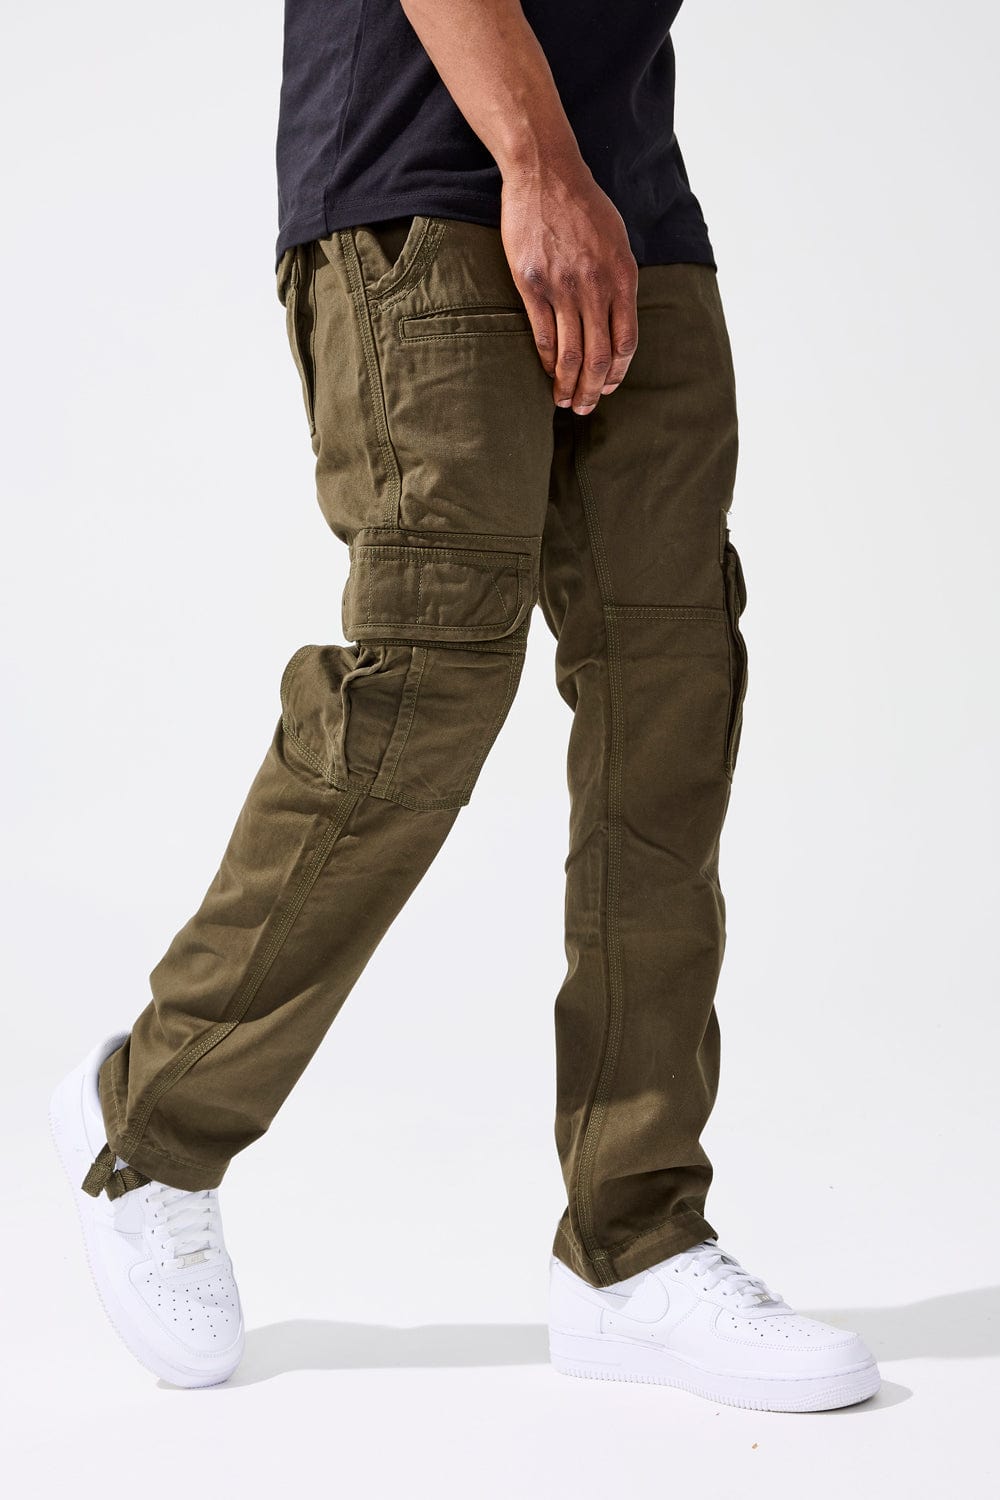 Jordan Craig Xavier - OG Cargo Pants (Army Green)